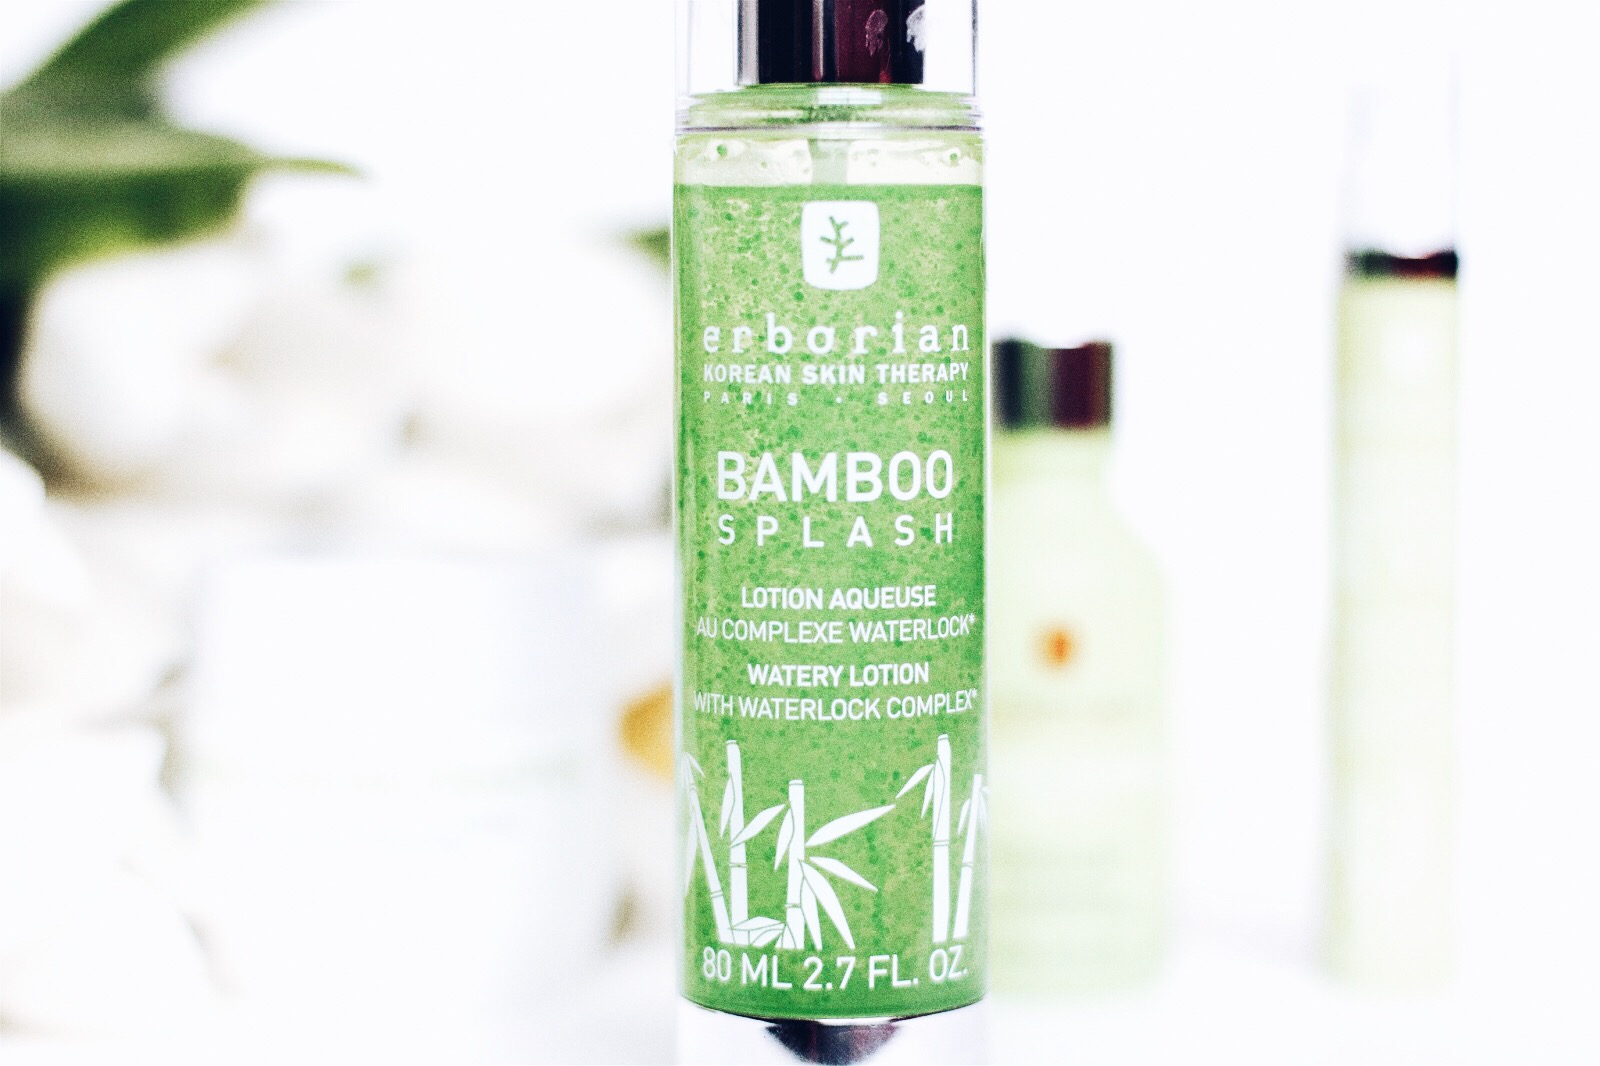 erborian bamboo splash lotion aqueuse avis test